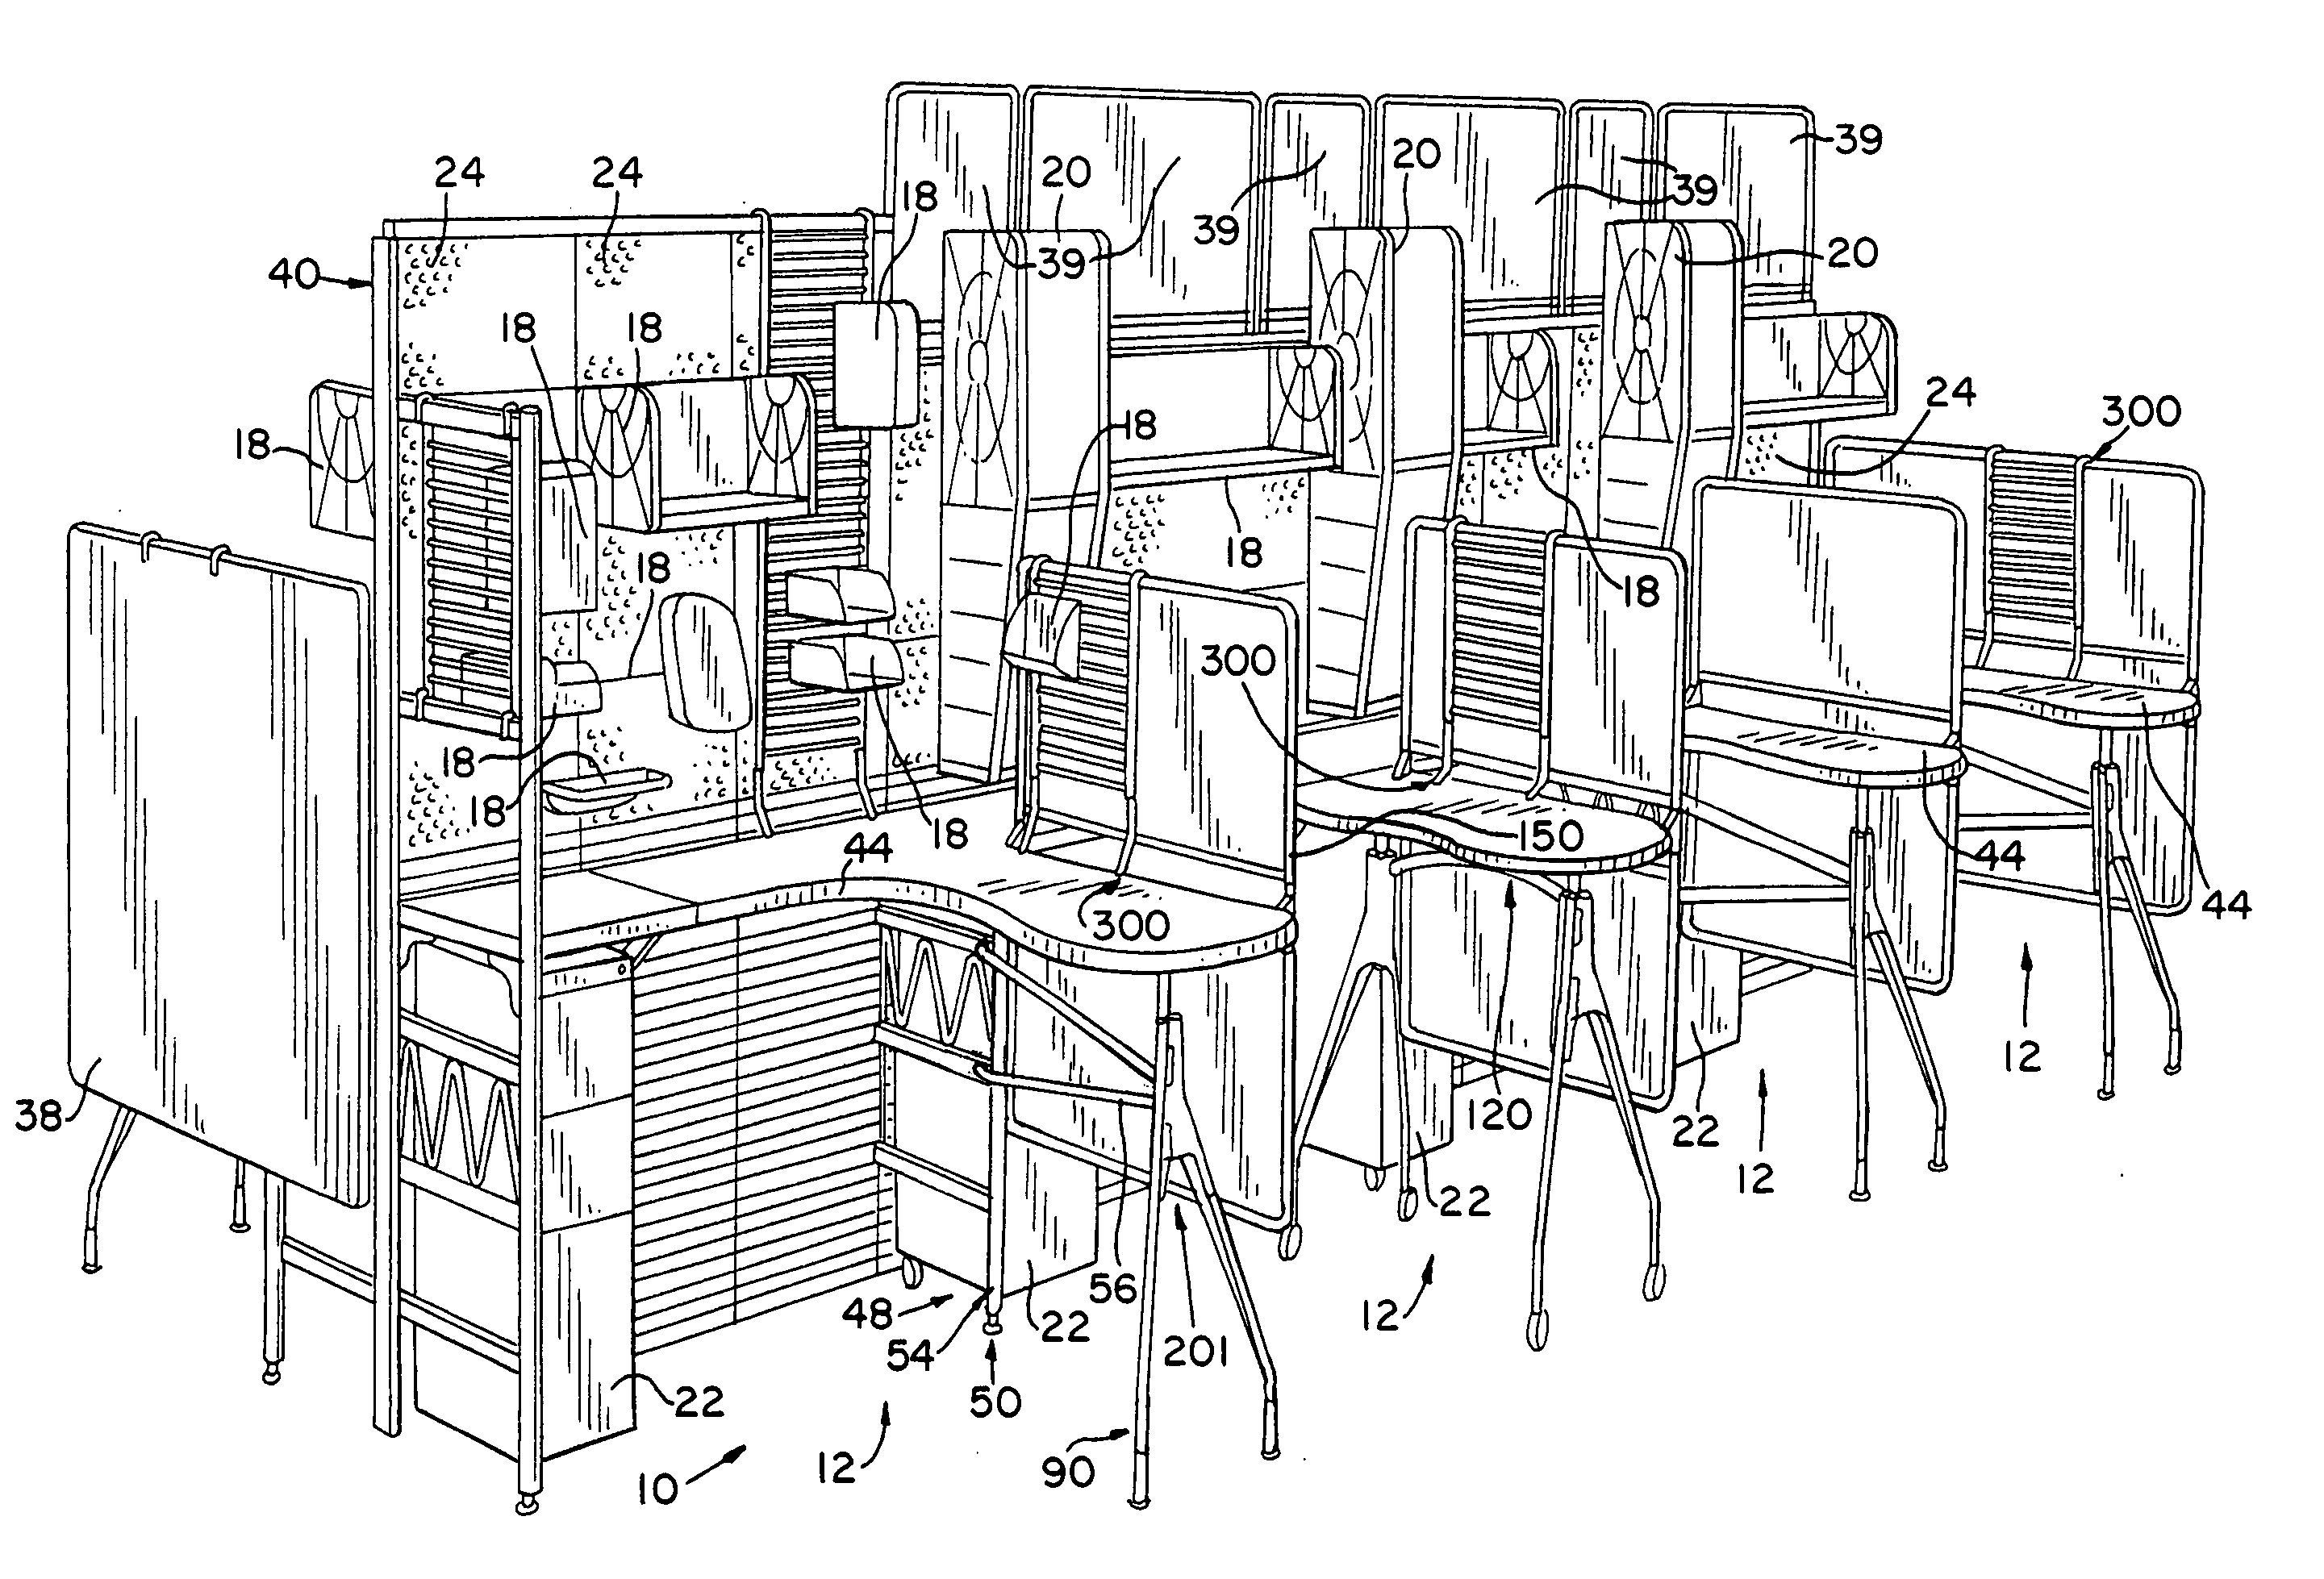 Furniture system